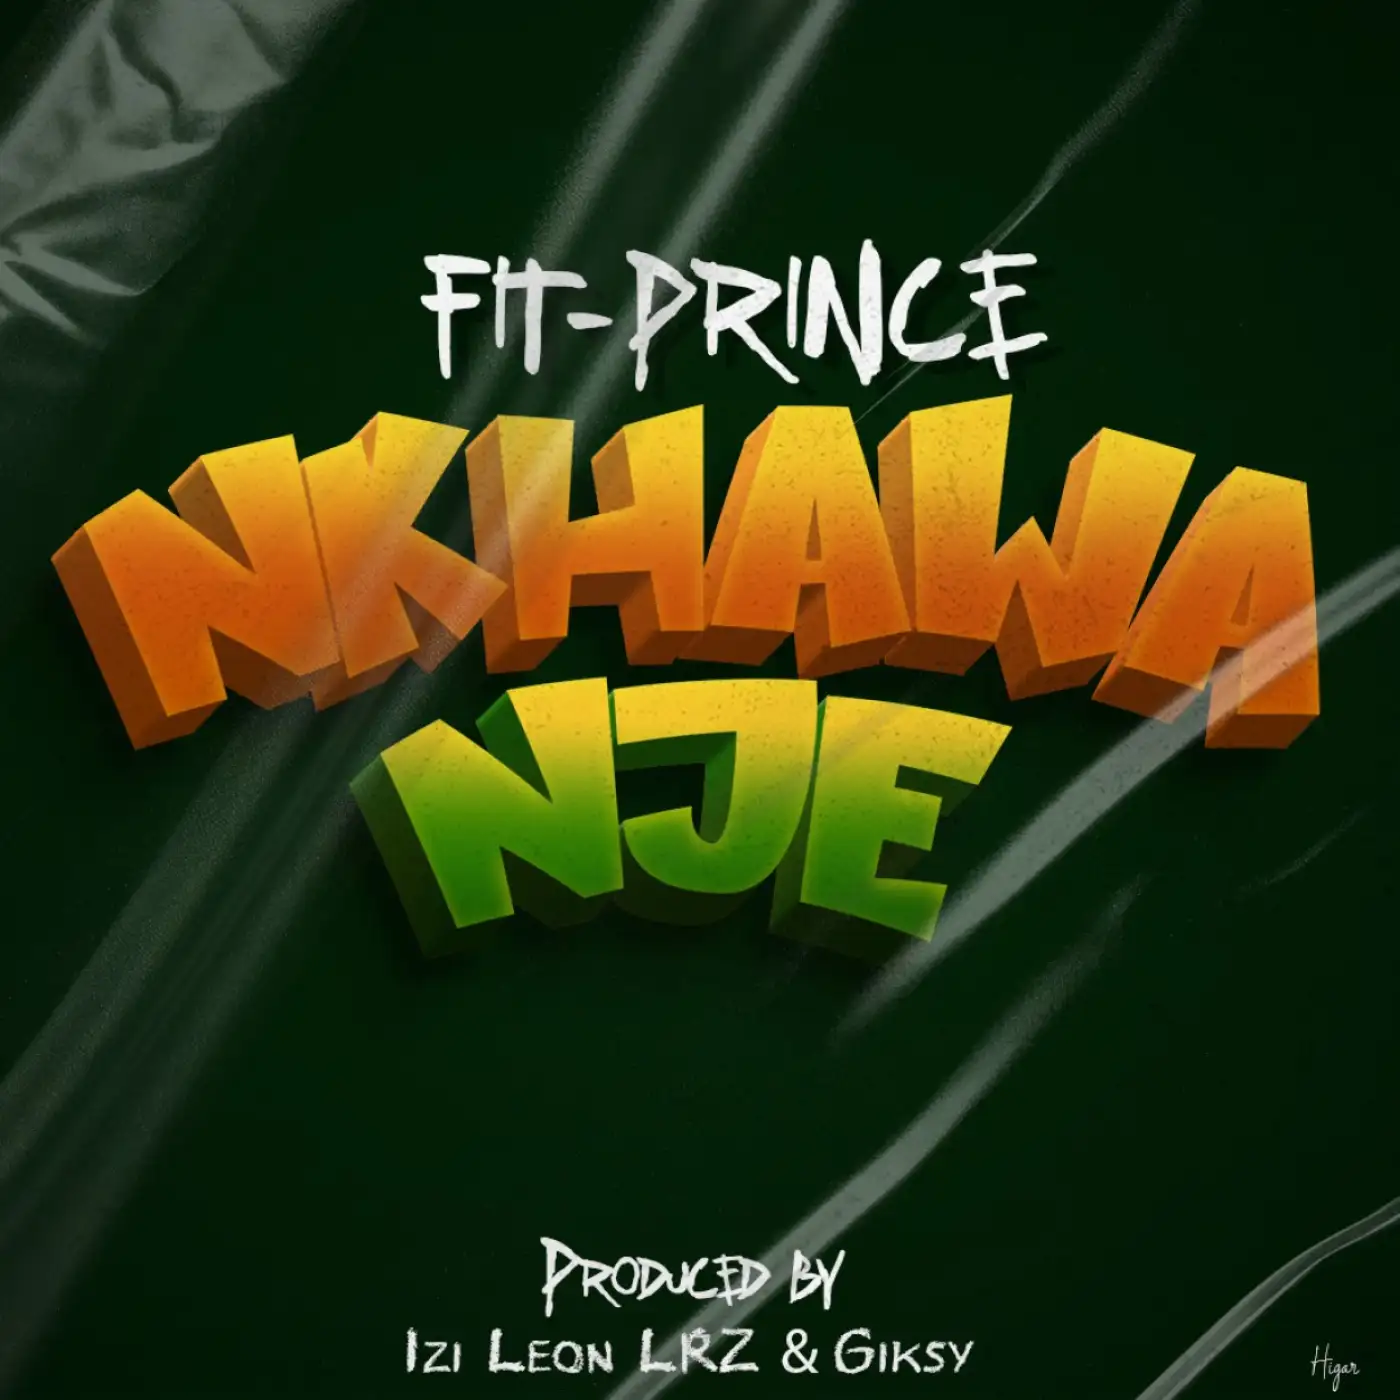 fit-prince-nkhawa-nje-prod-izi-leon-lrz-giksy-mp3-download-mp3 download